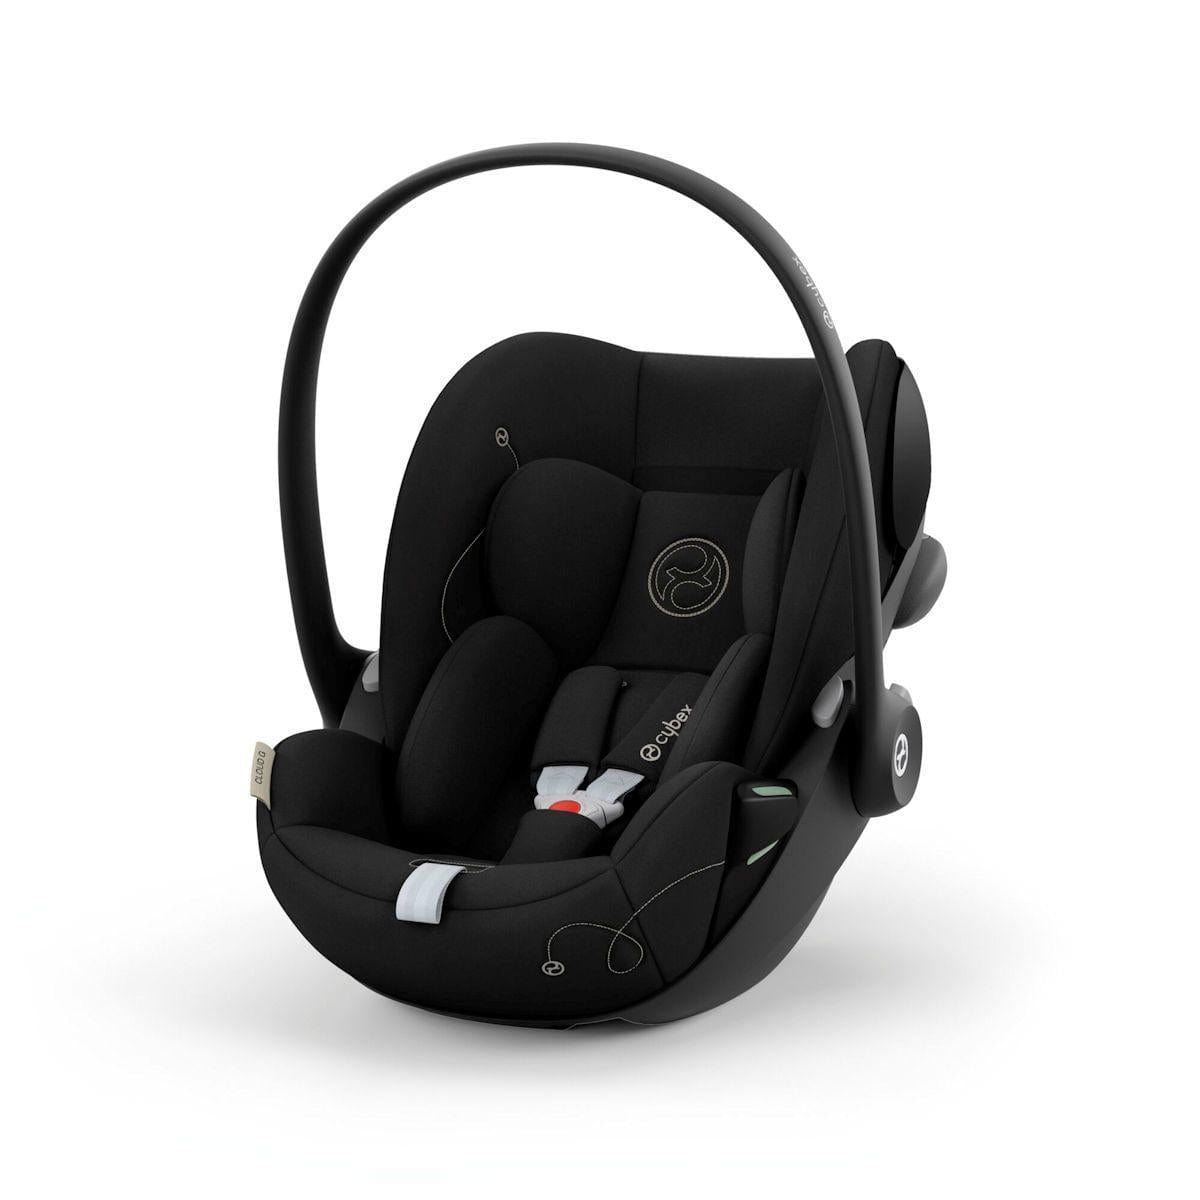 Cybex baby car seats Cybex G i-Size Car Seat Bundle - Moon Black 15302-MOO-BLK